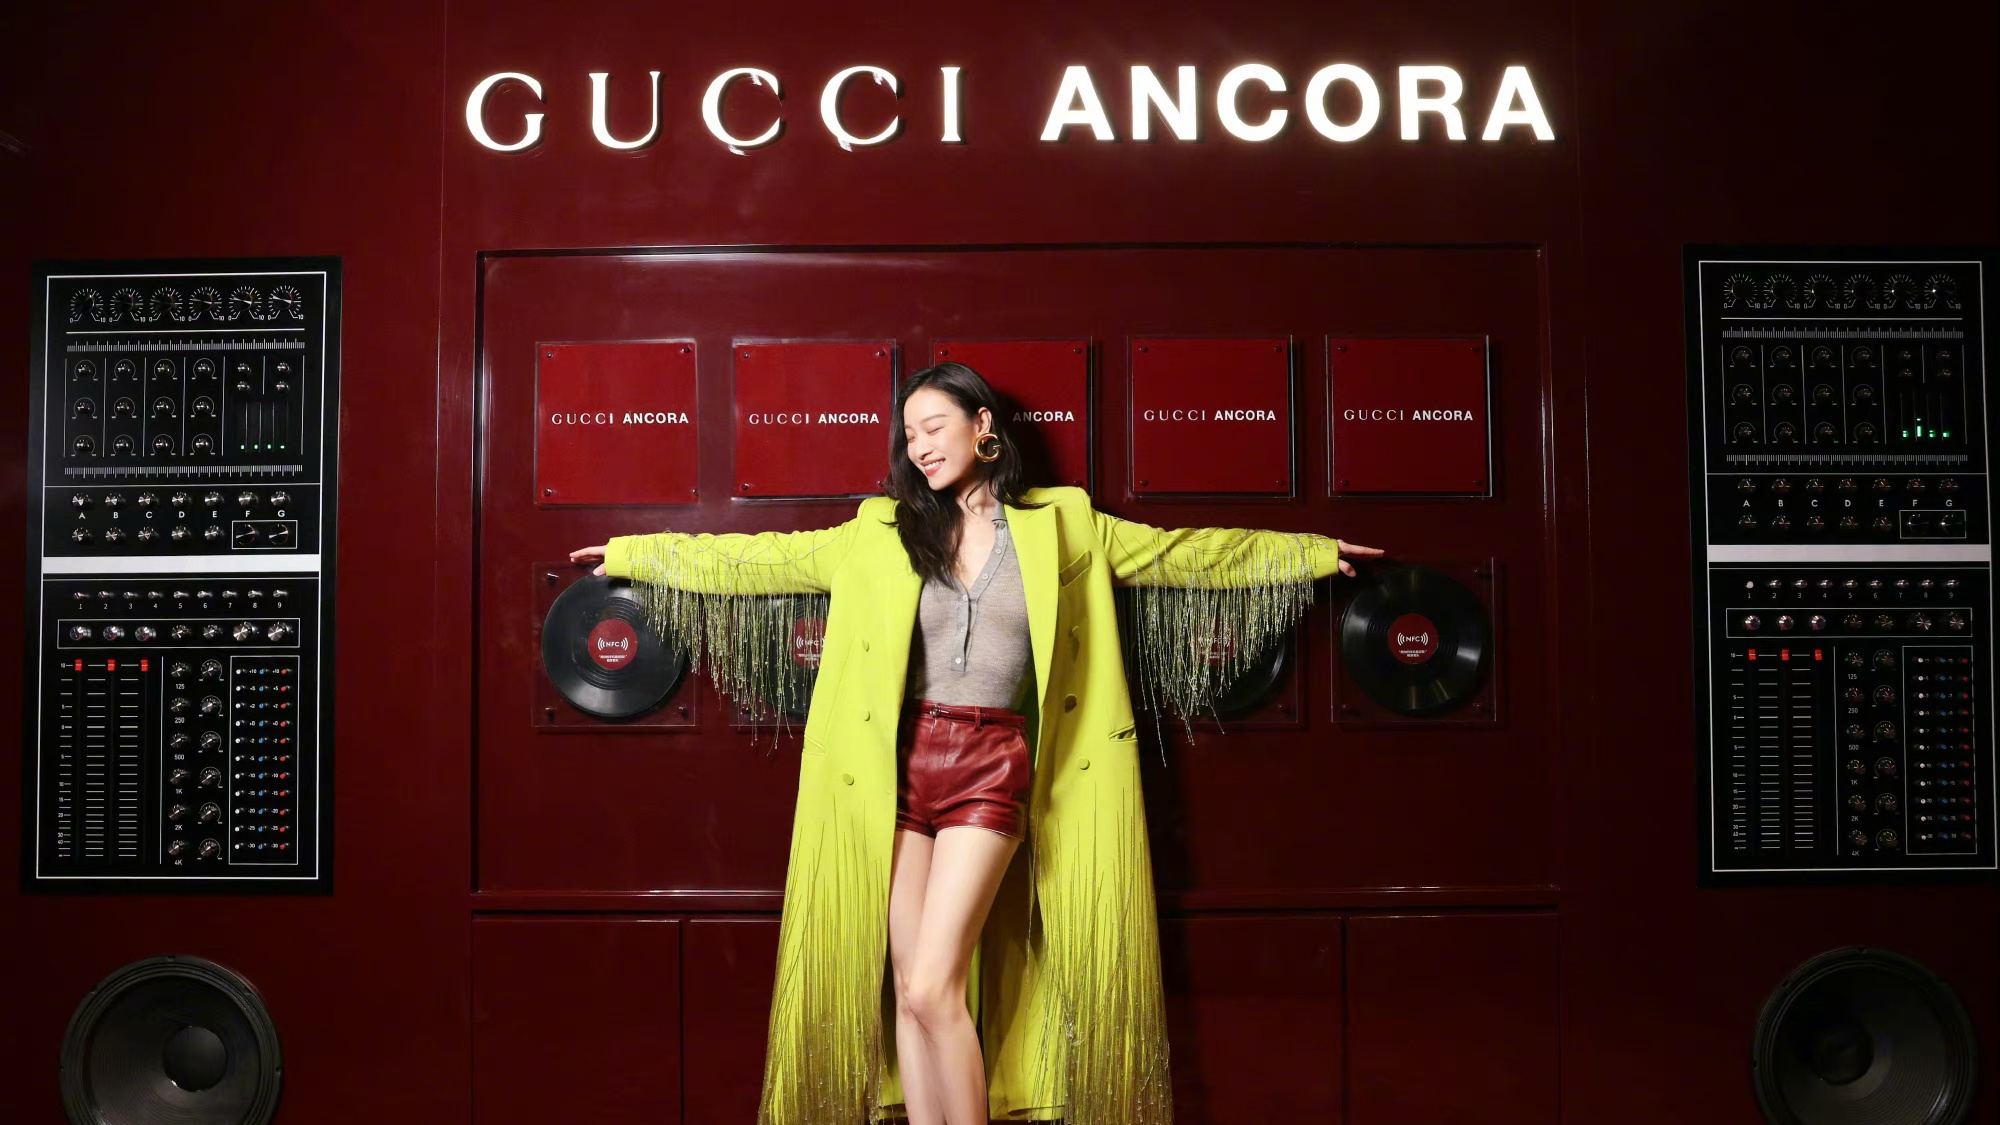 Gucci ambassador Ni Ni attends the Gucci Ancora pop-up in Shanghai. Photo: Weibo